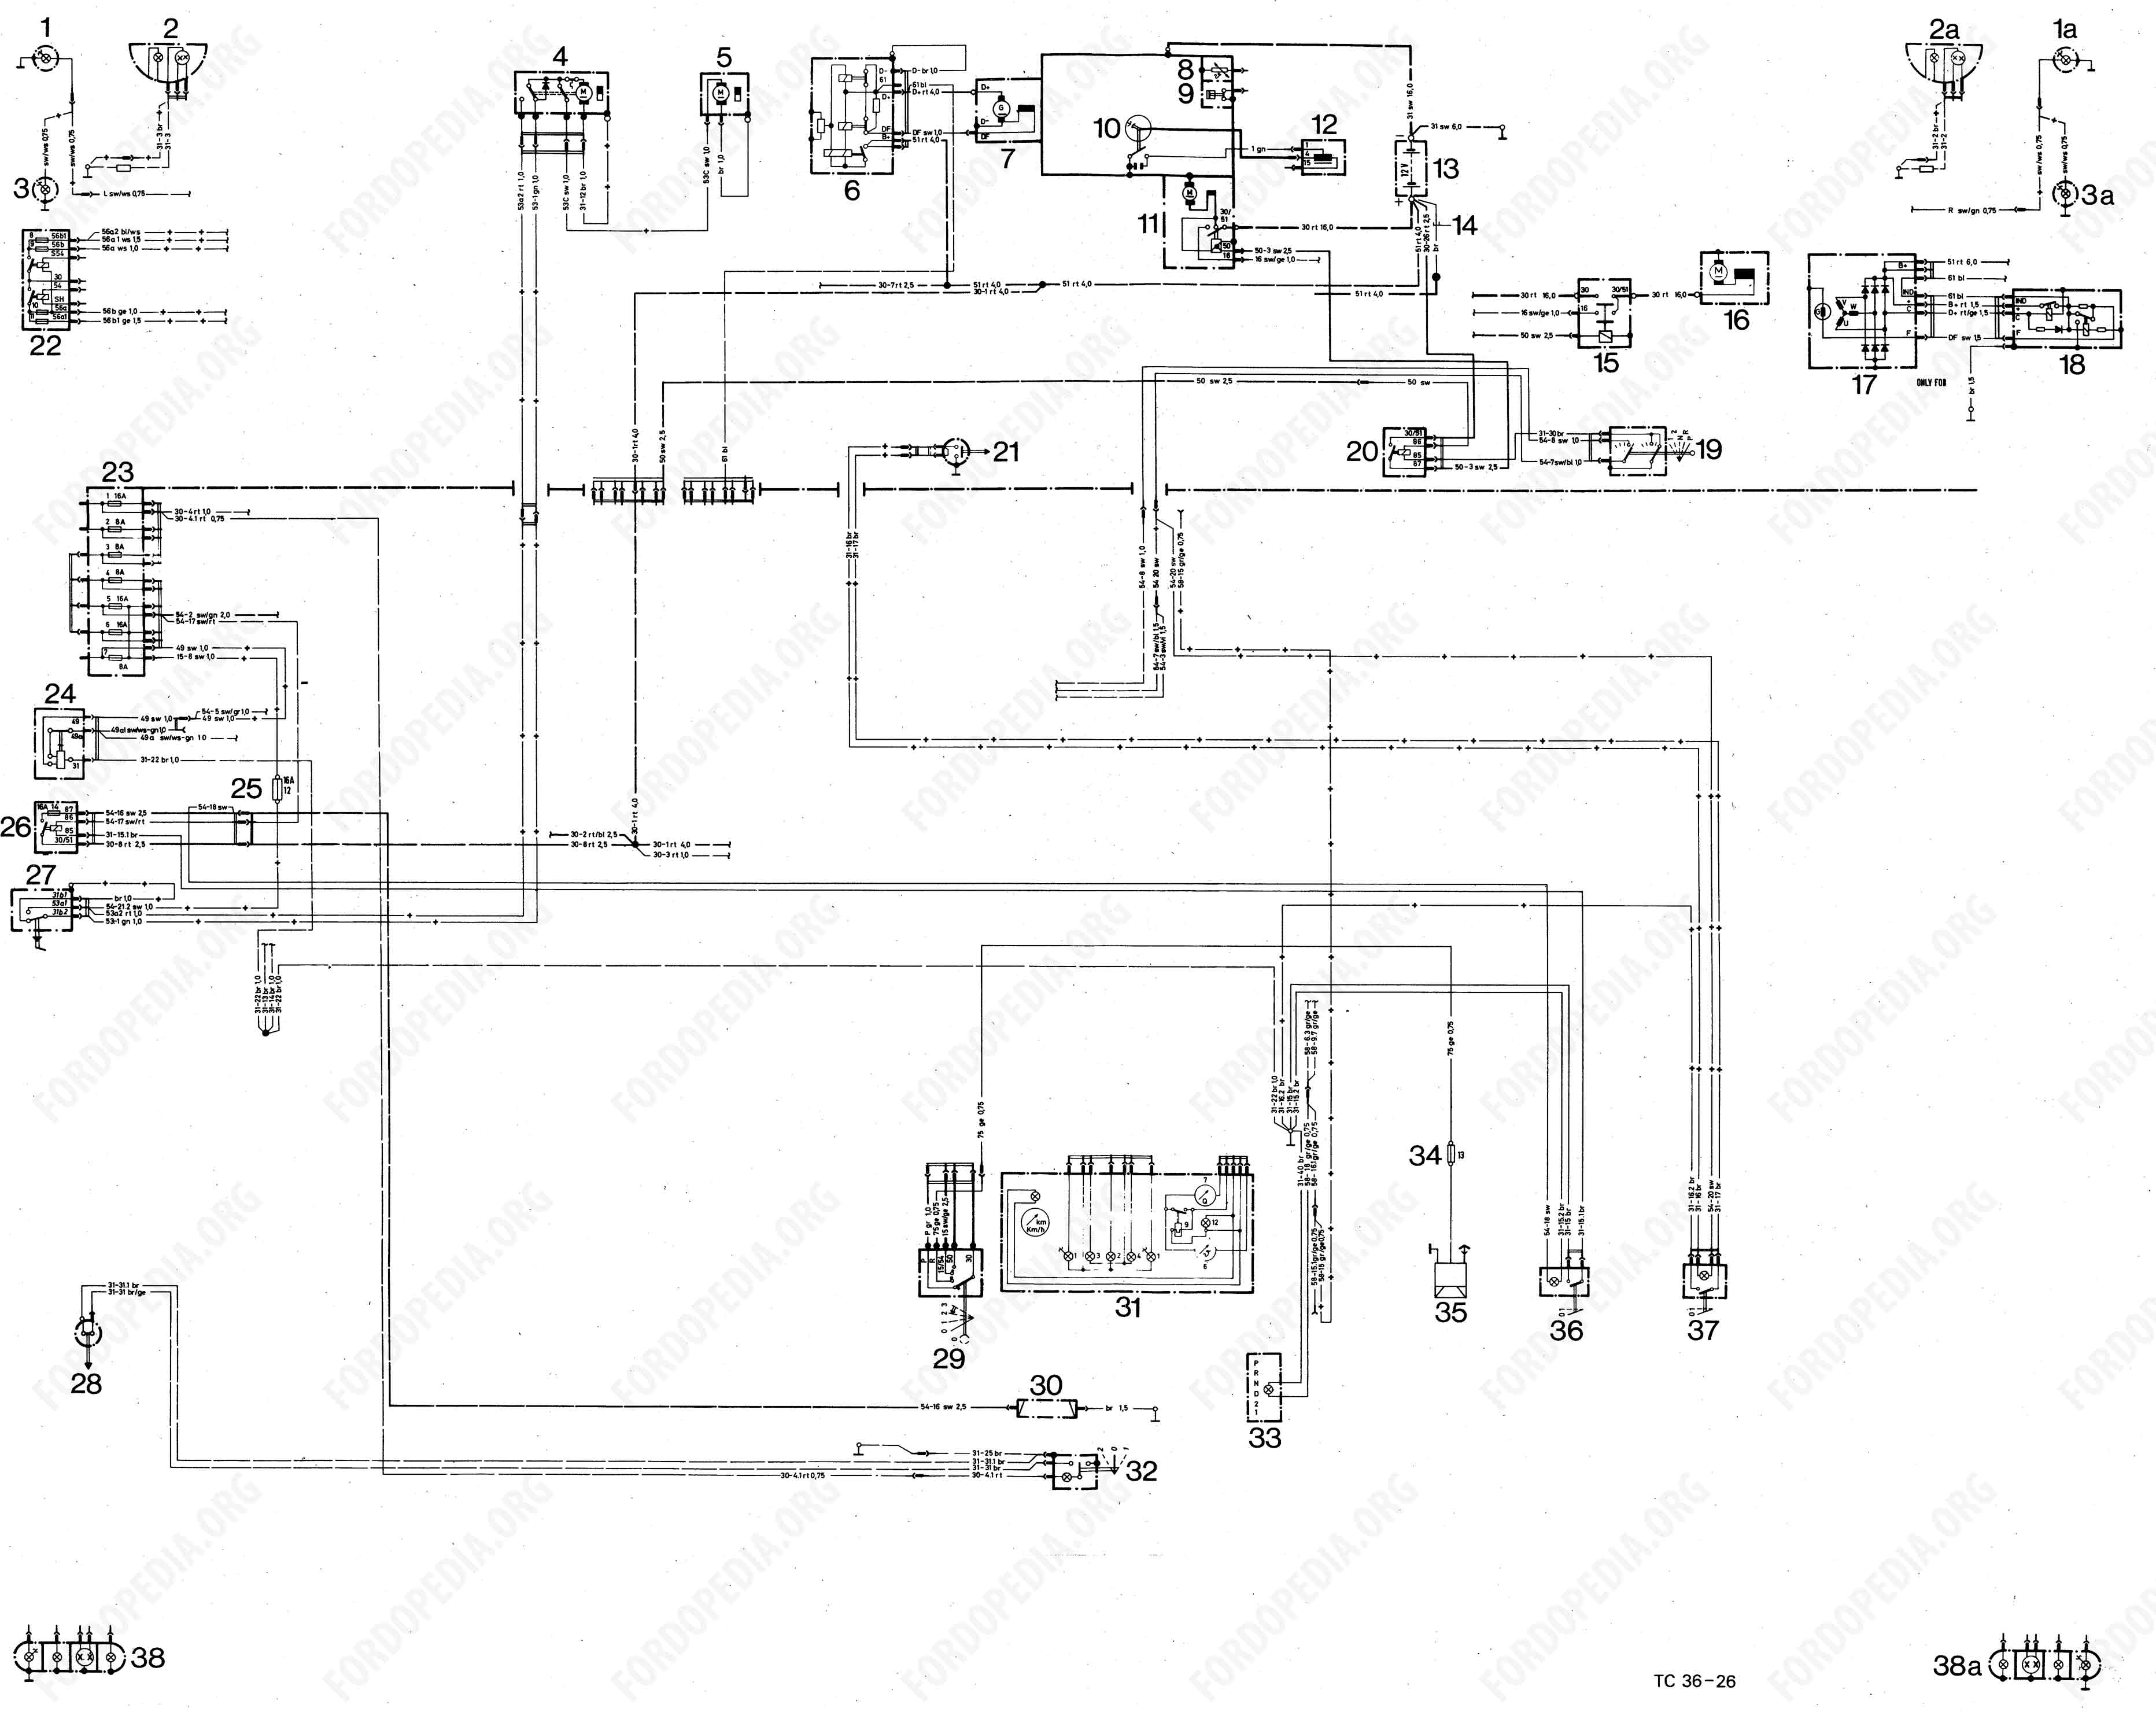 Ford cortina wiring diagram #8